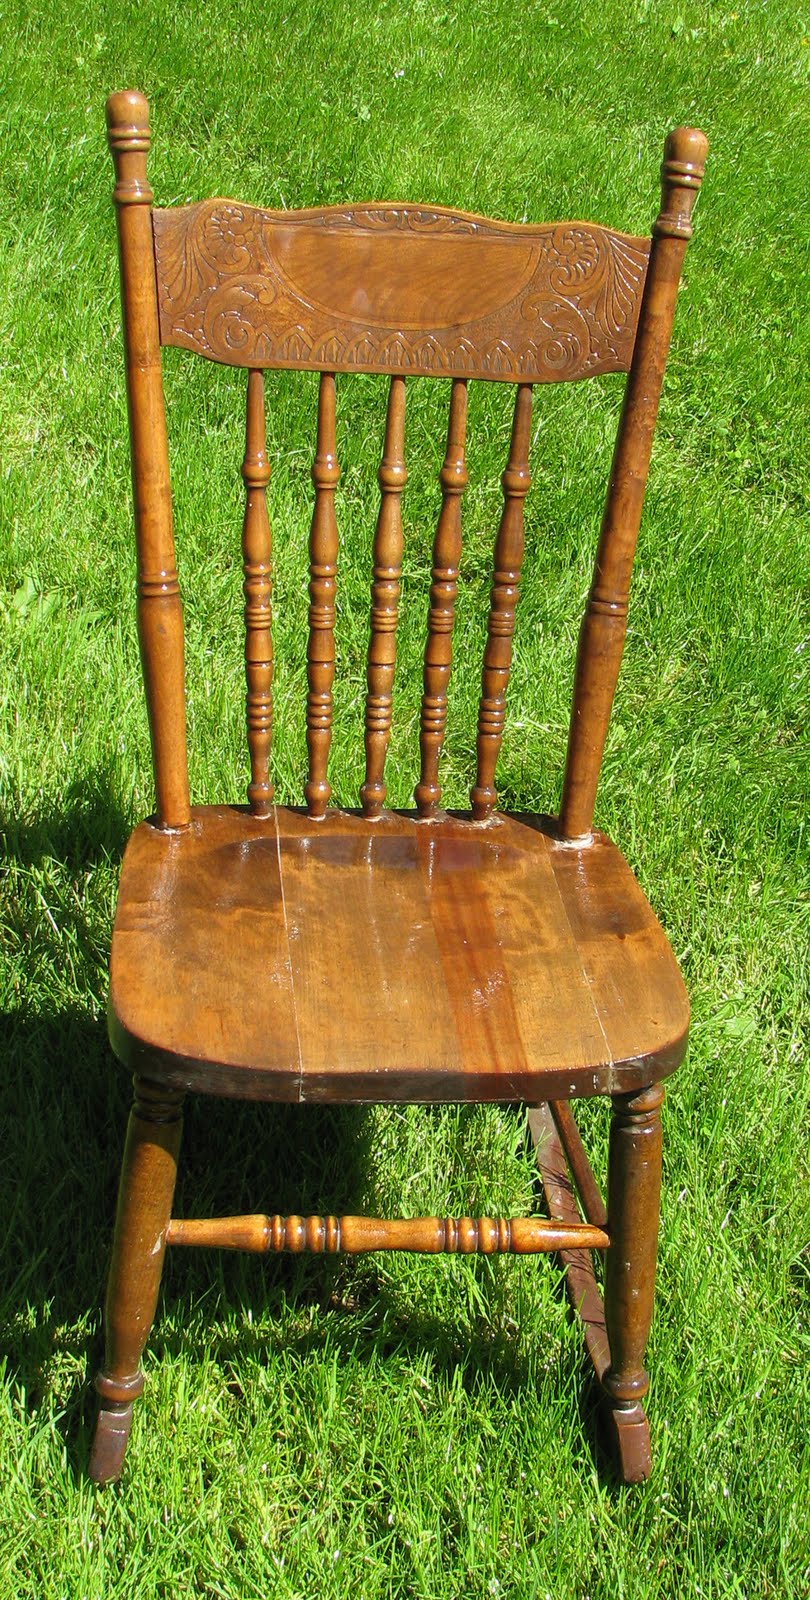 Upcycling My (ordinary) Life!: Little tiny Nova Scotia rocking chair...